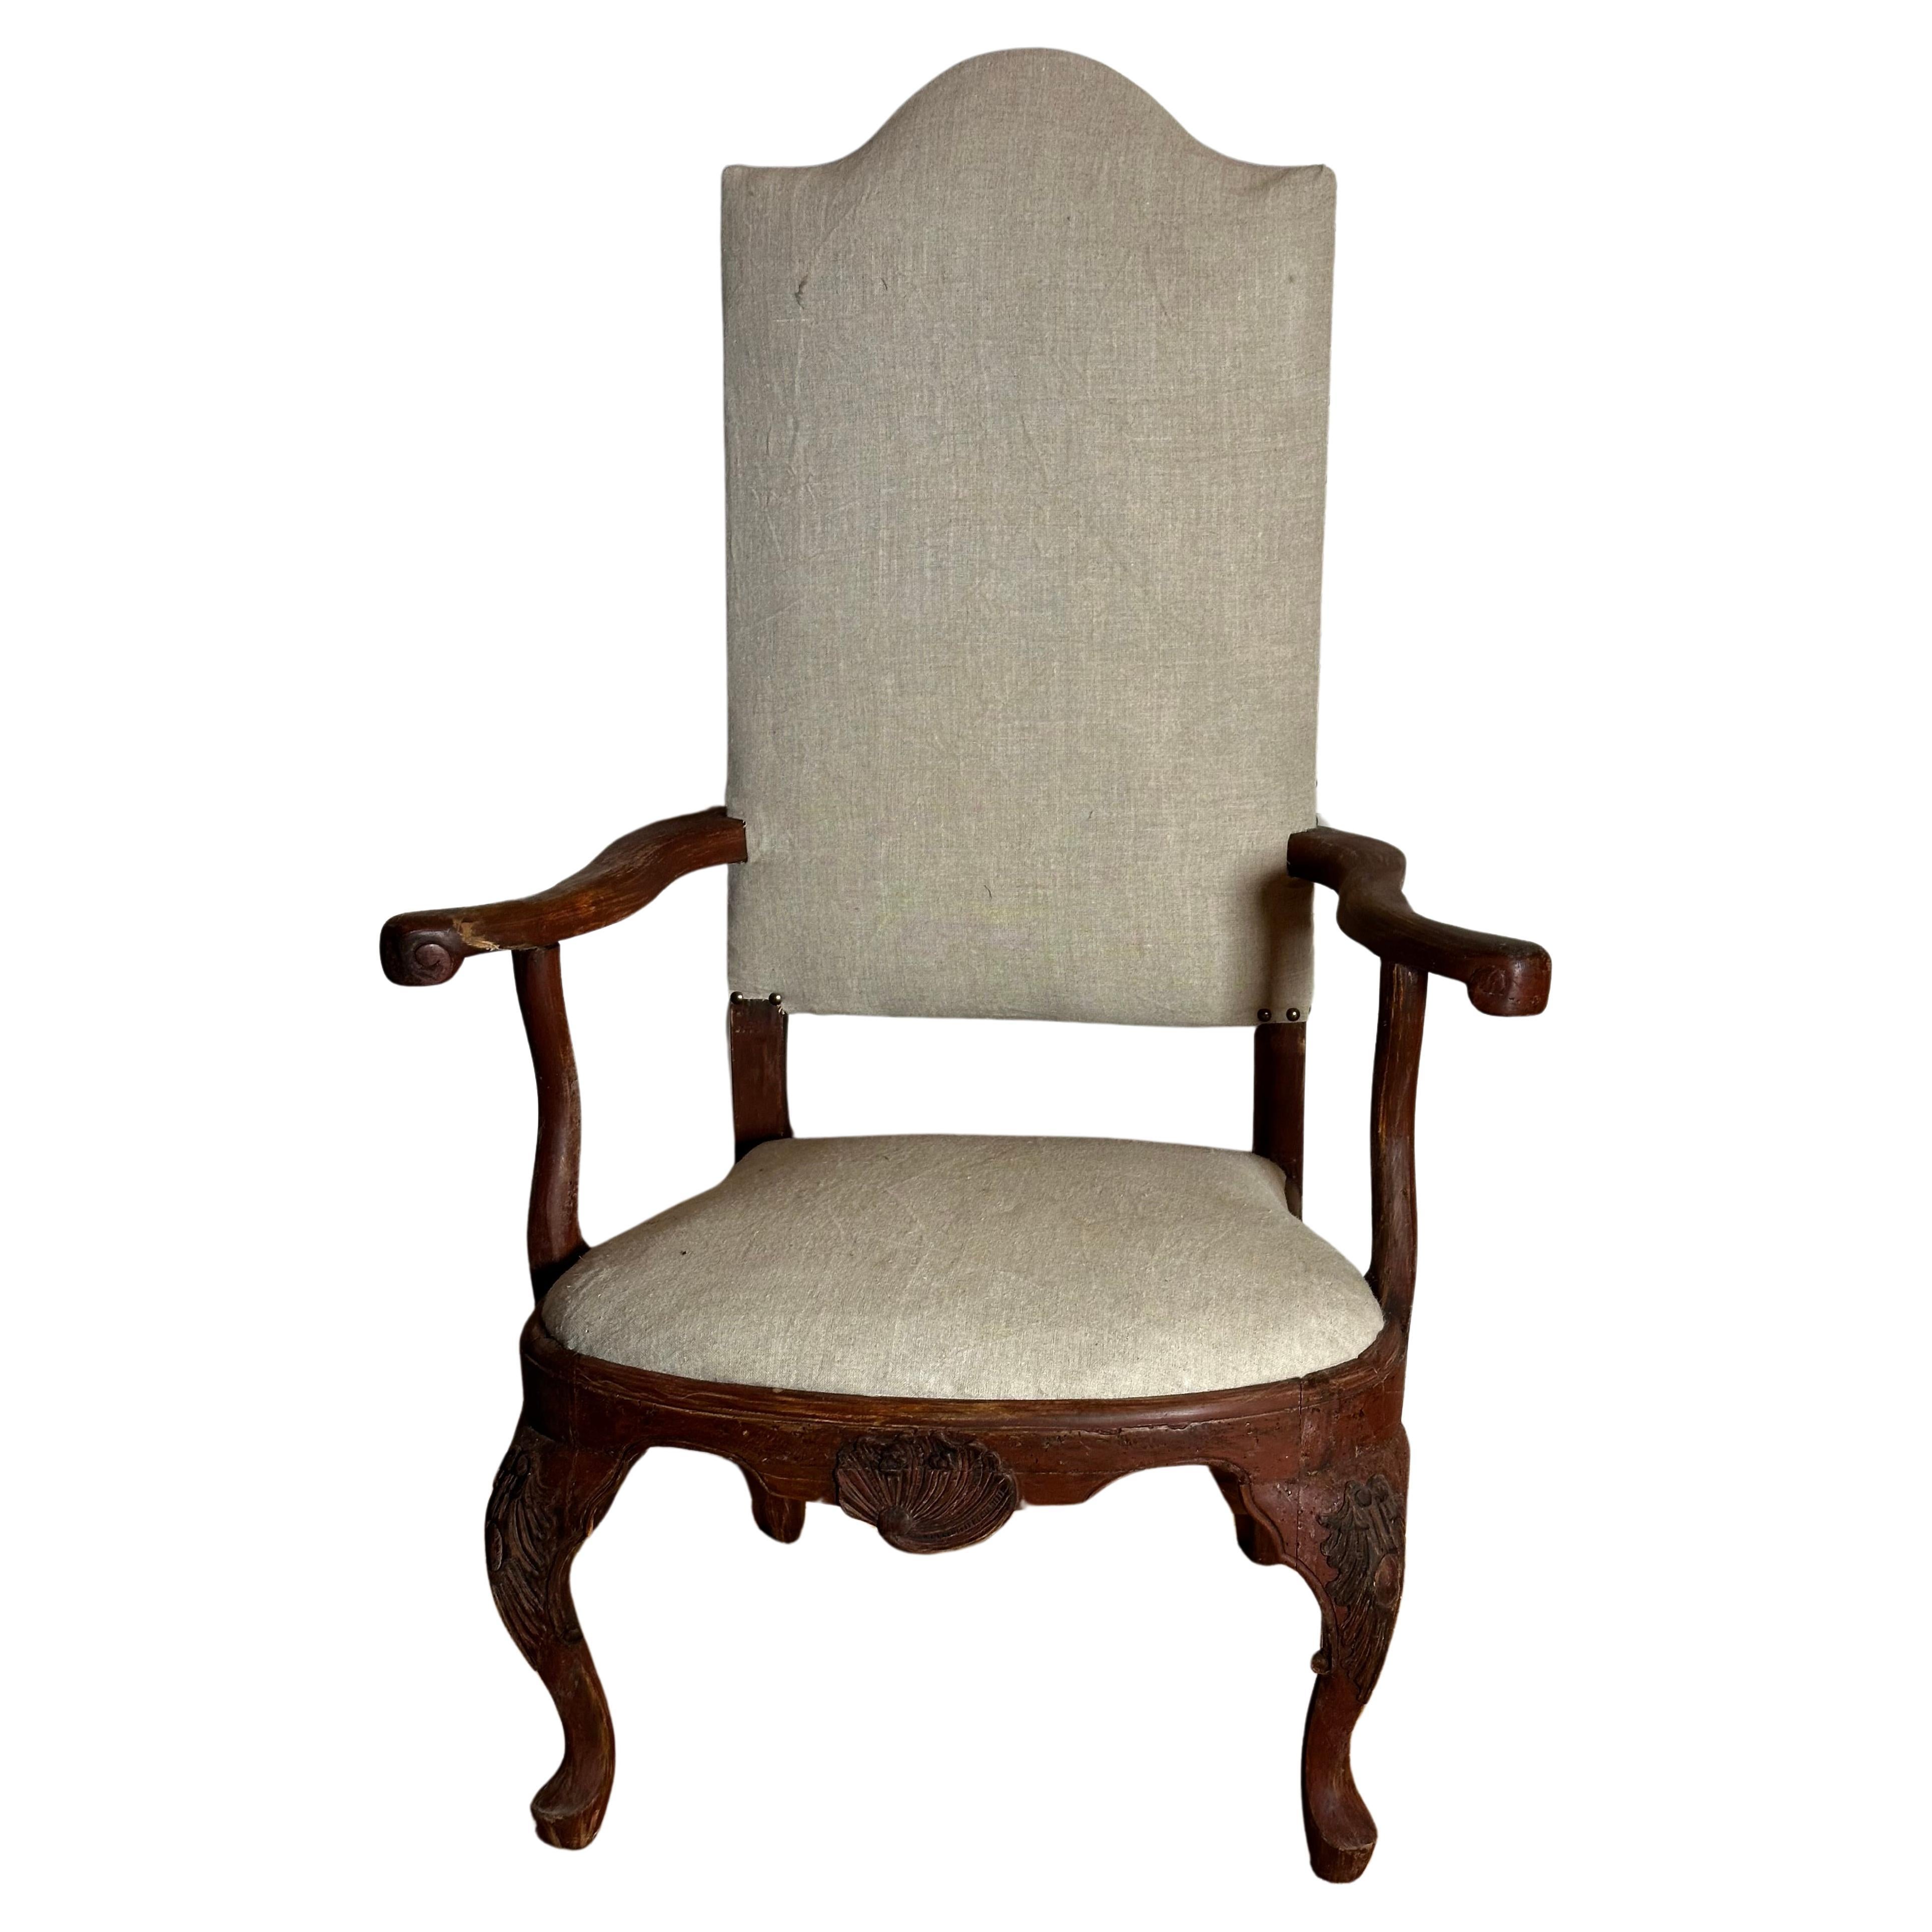 18th Century Late baroque armchair in original color